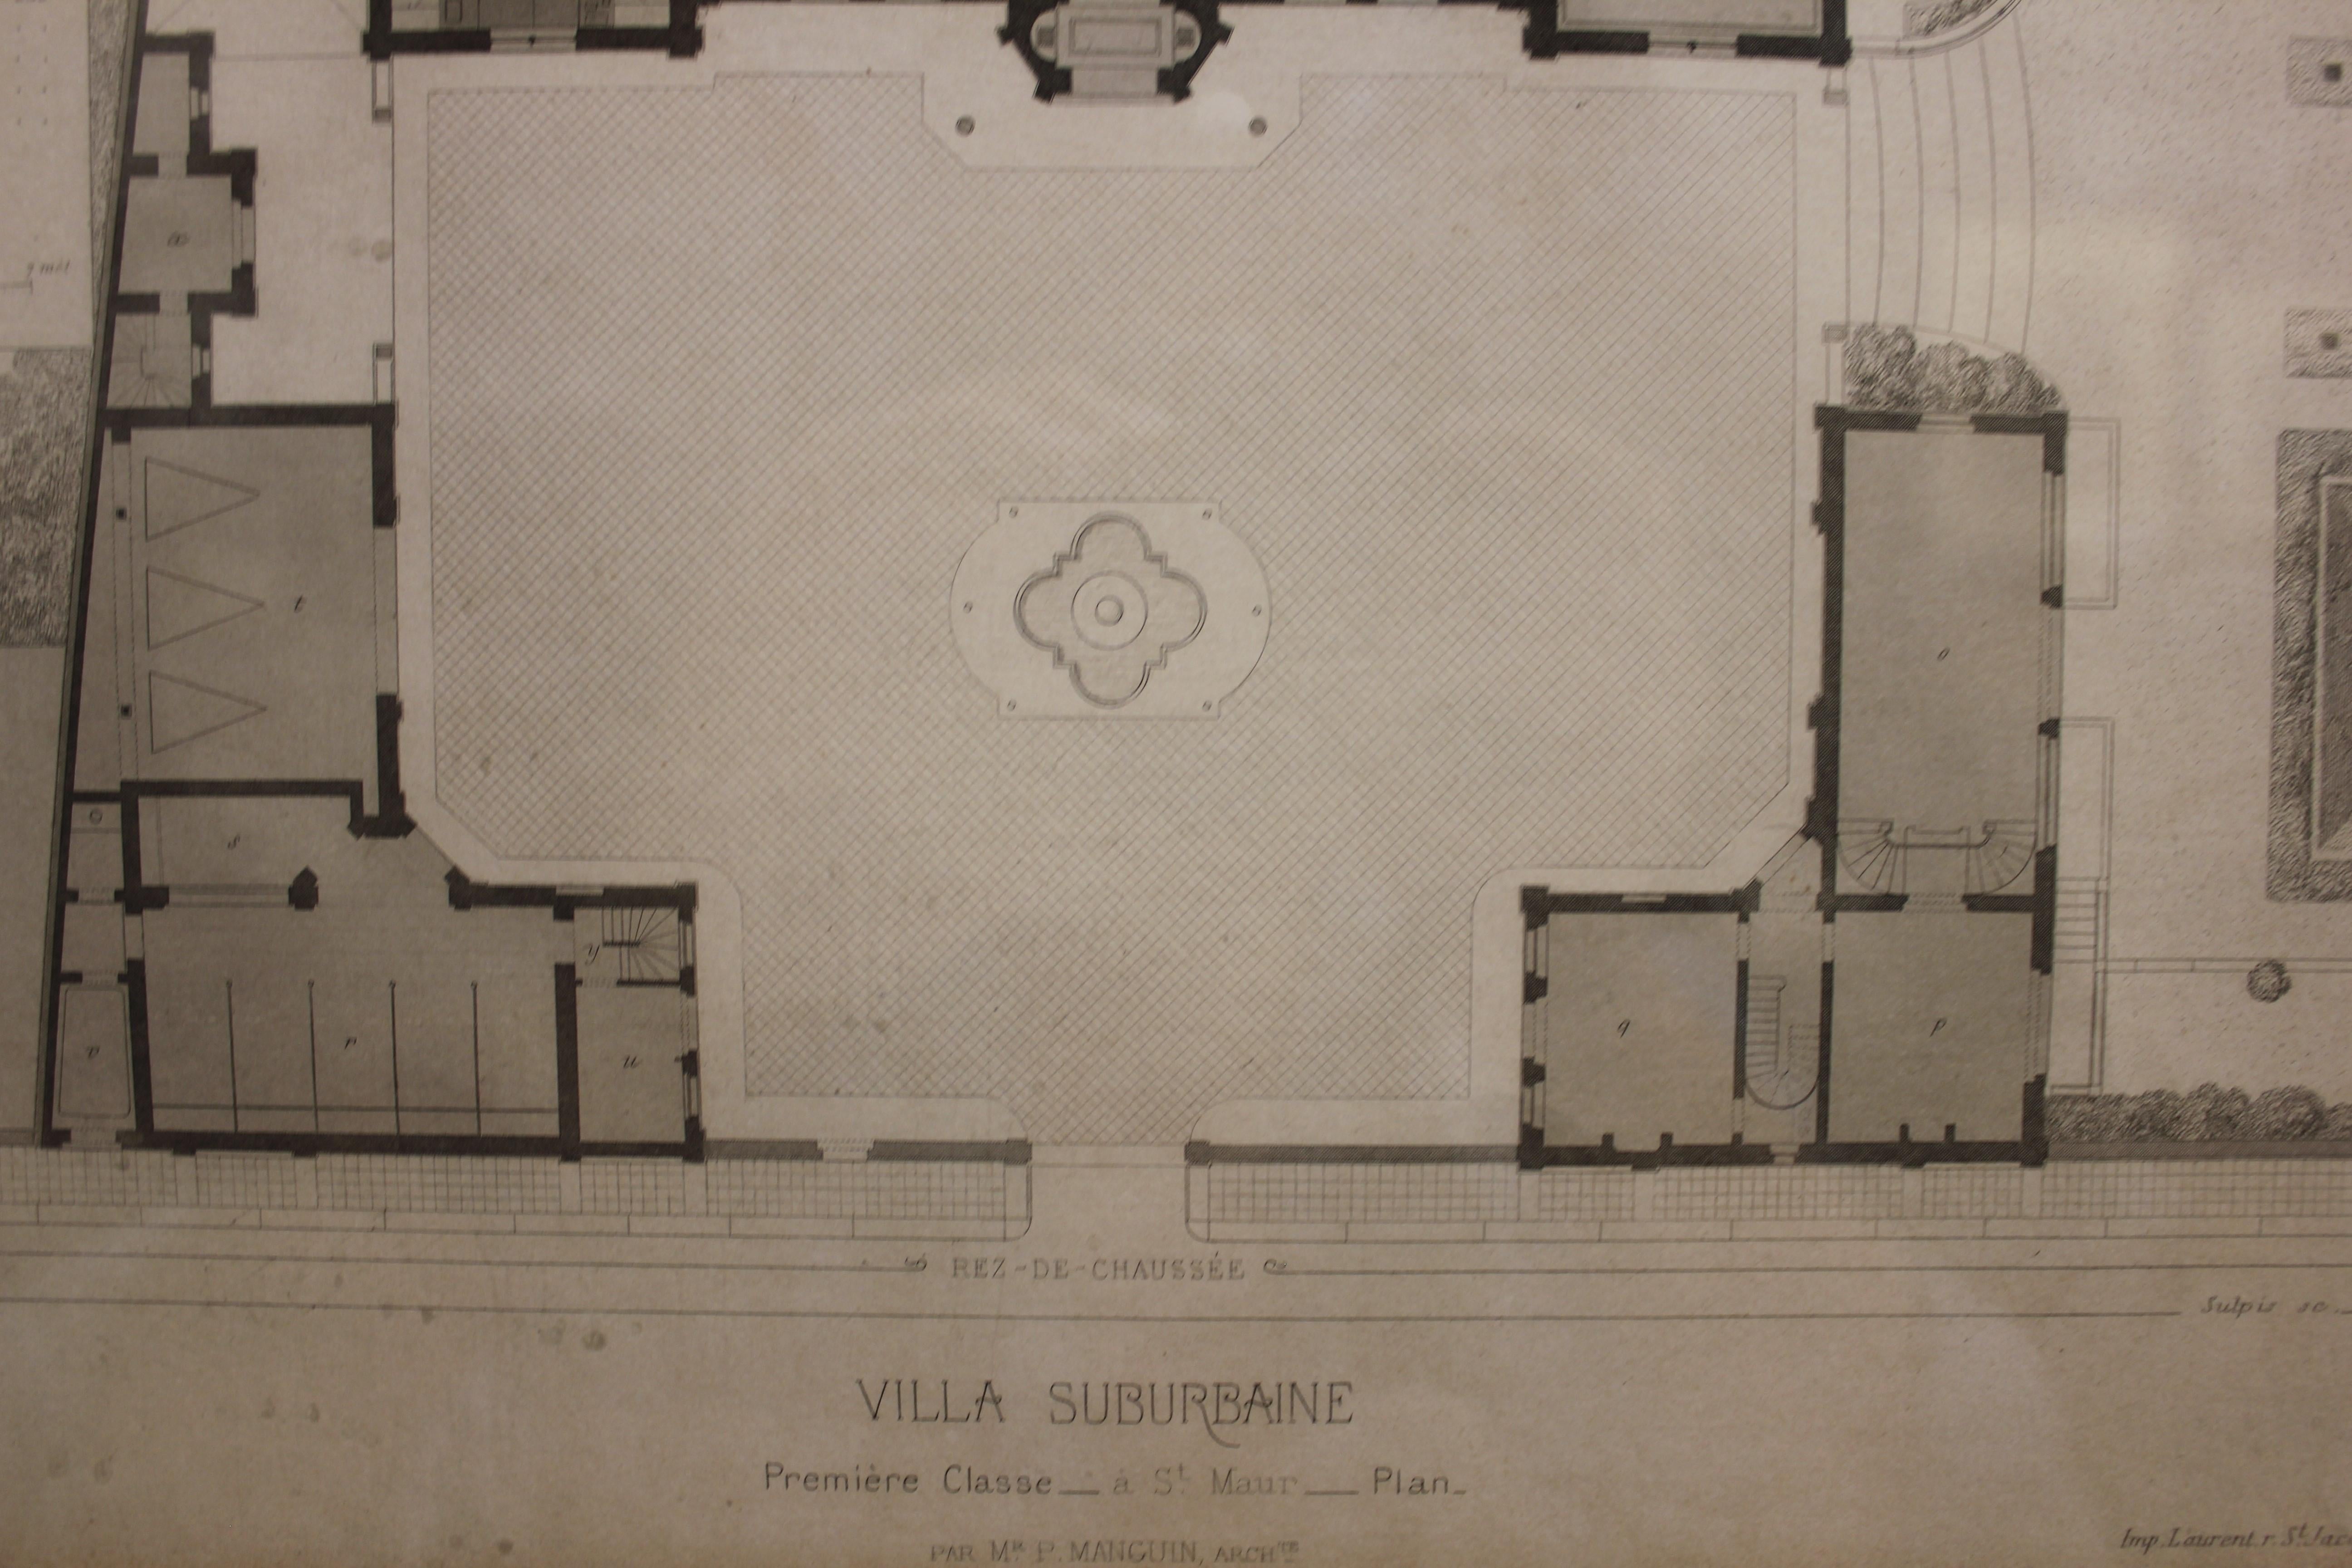 Private Architecture in 19th Century, Parisian Suburban Villa Floor Plan - Print by Mr. P. Manguin